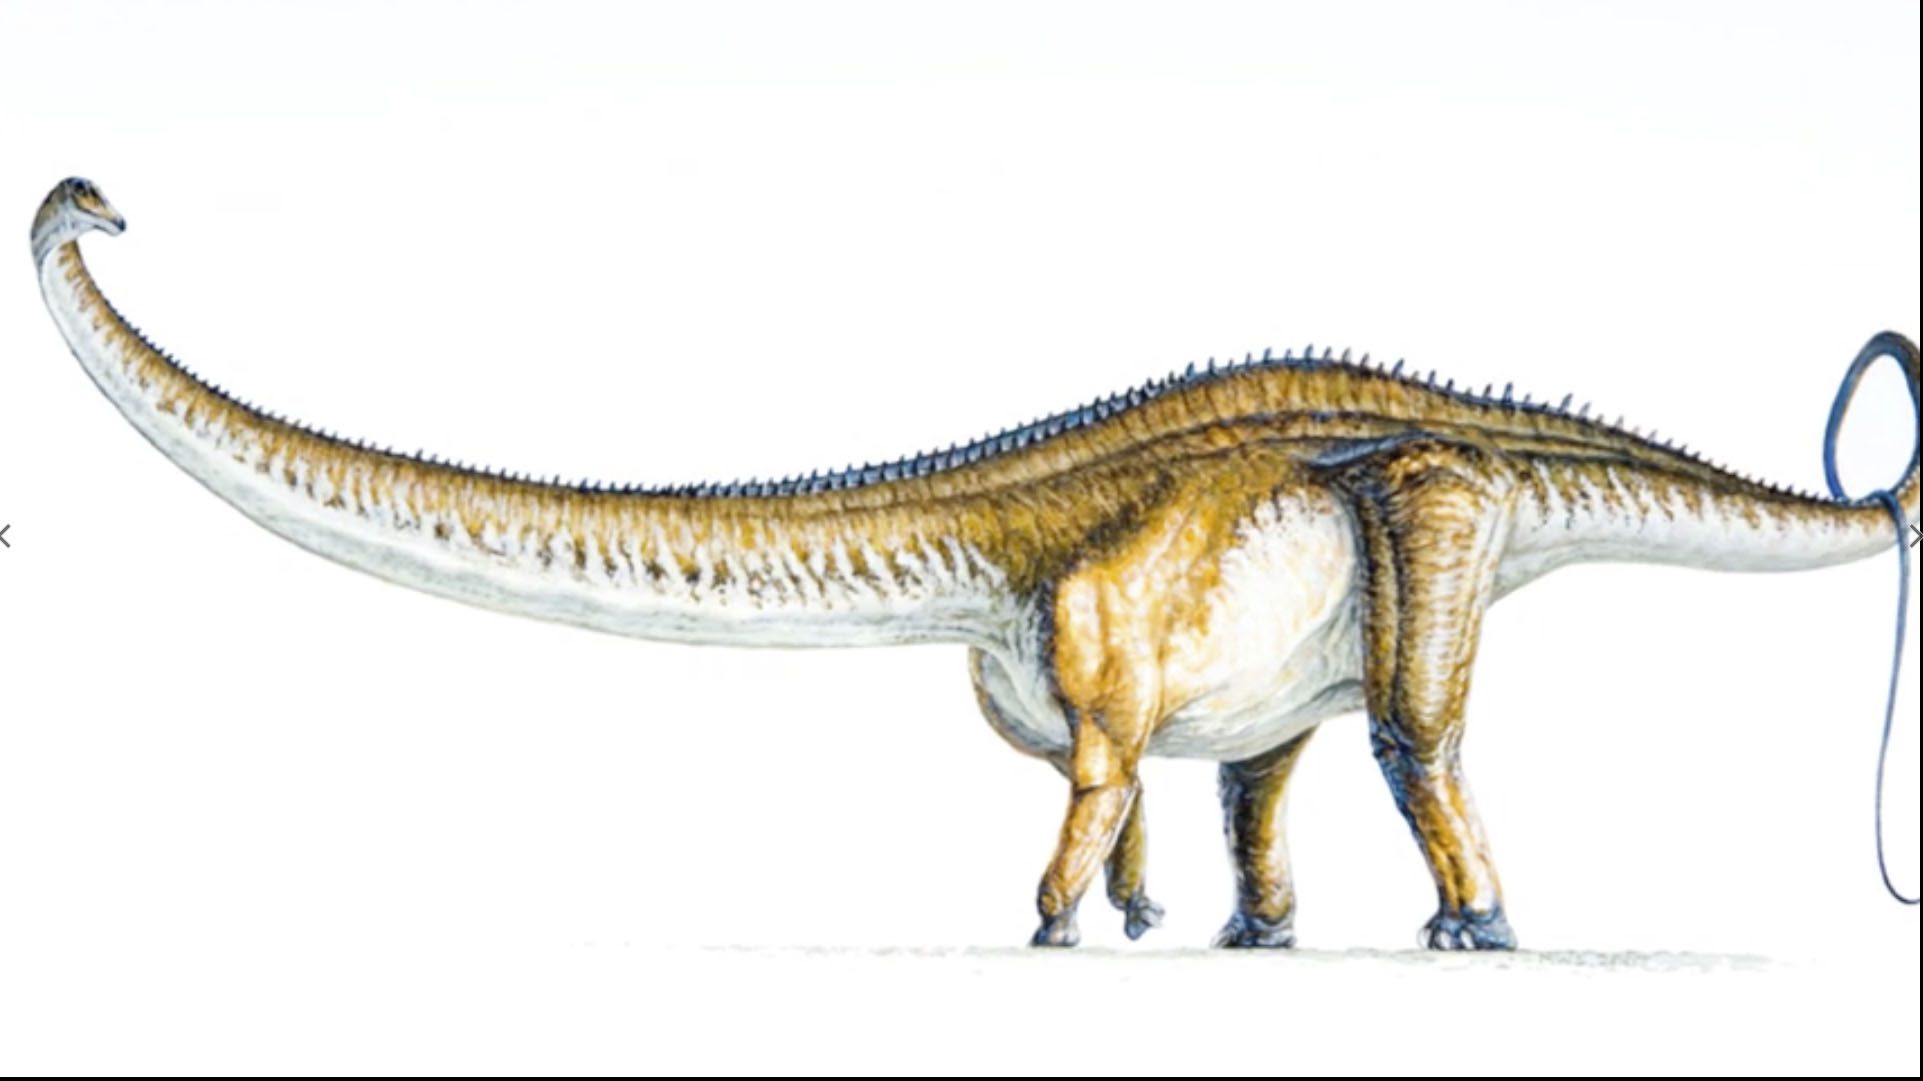 An illustration of a sauropod